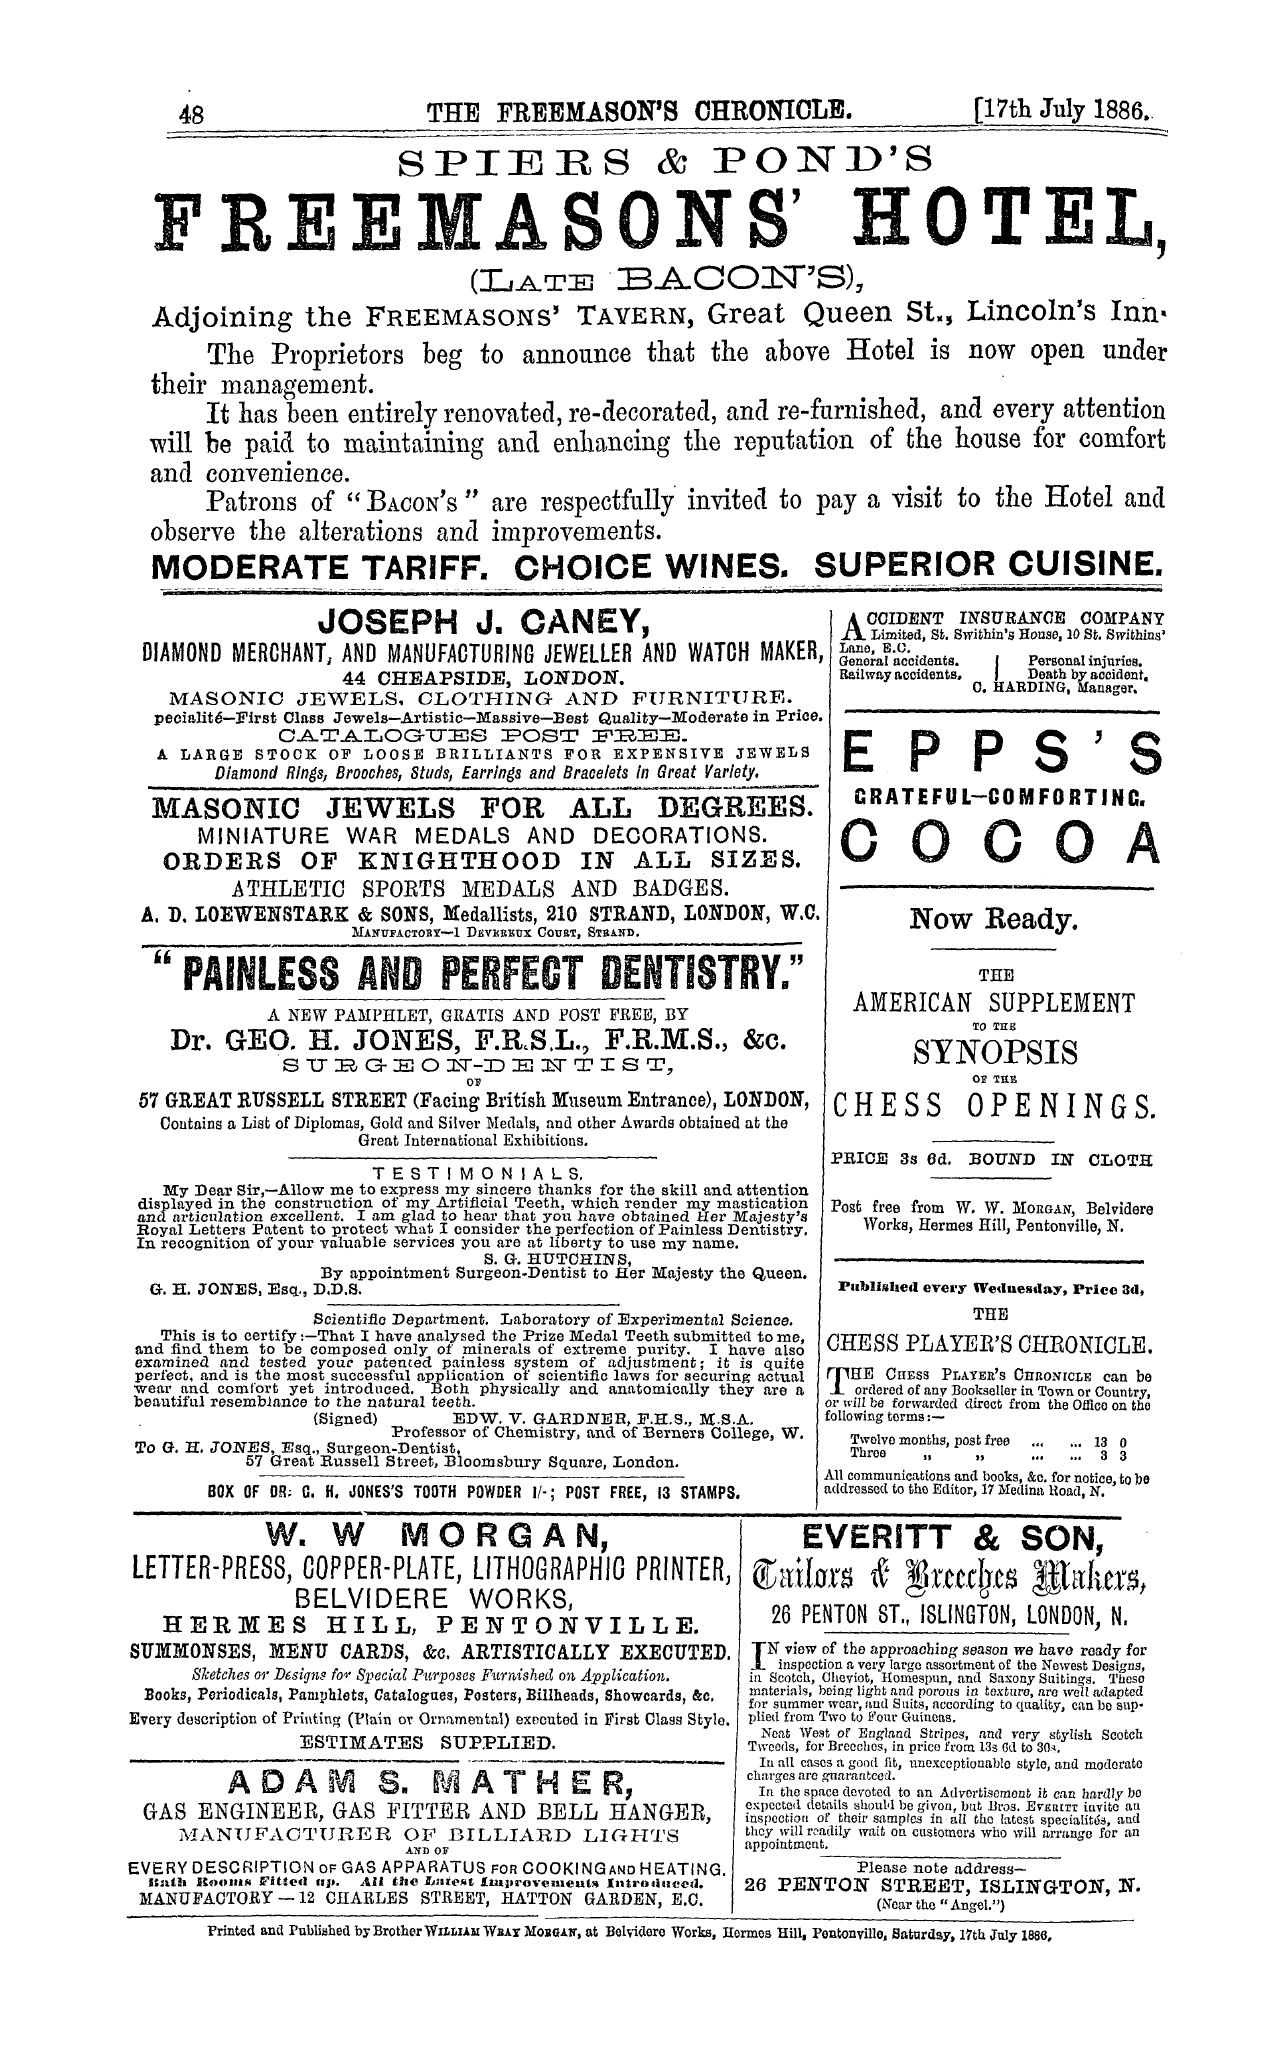 The Freemason's Chronicle: 1886-07-17 - Ad01606